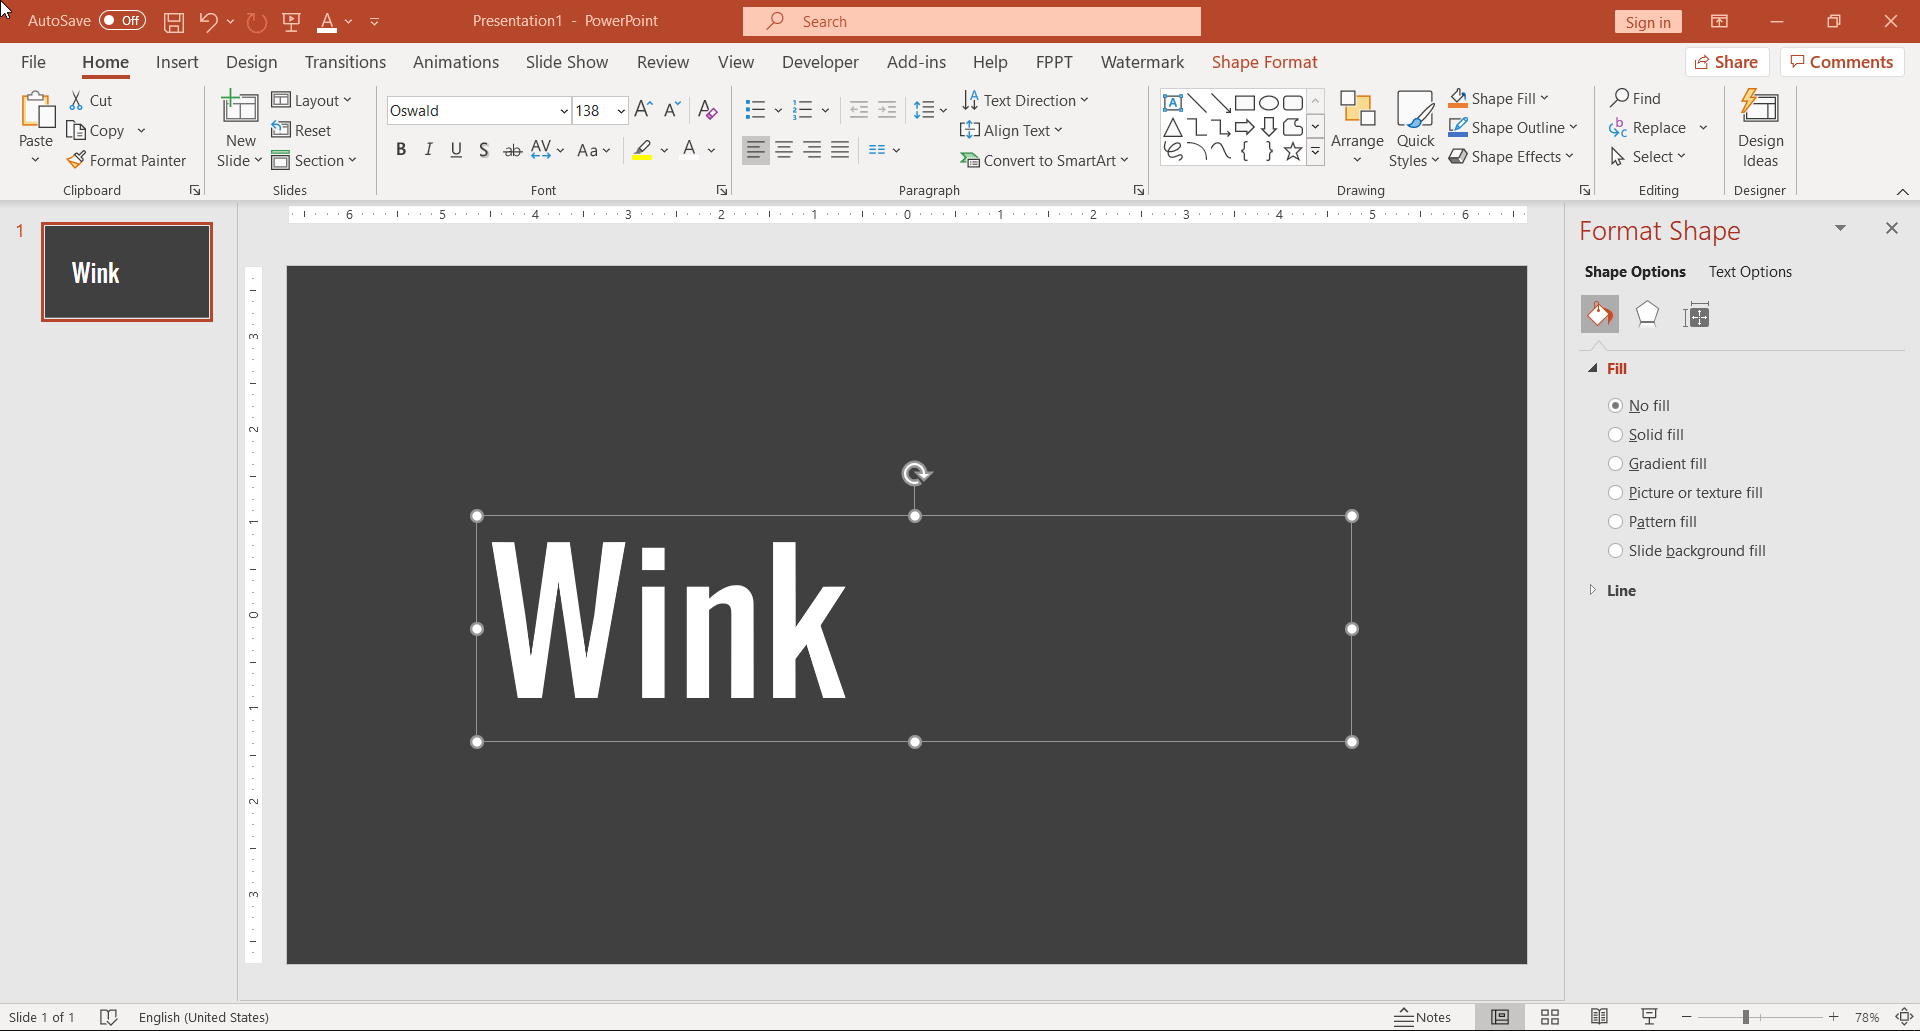 Emojipedia Wink Emoji in a PowerPoint presentation